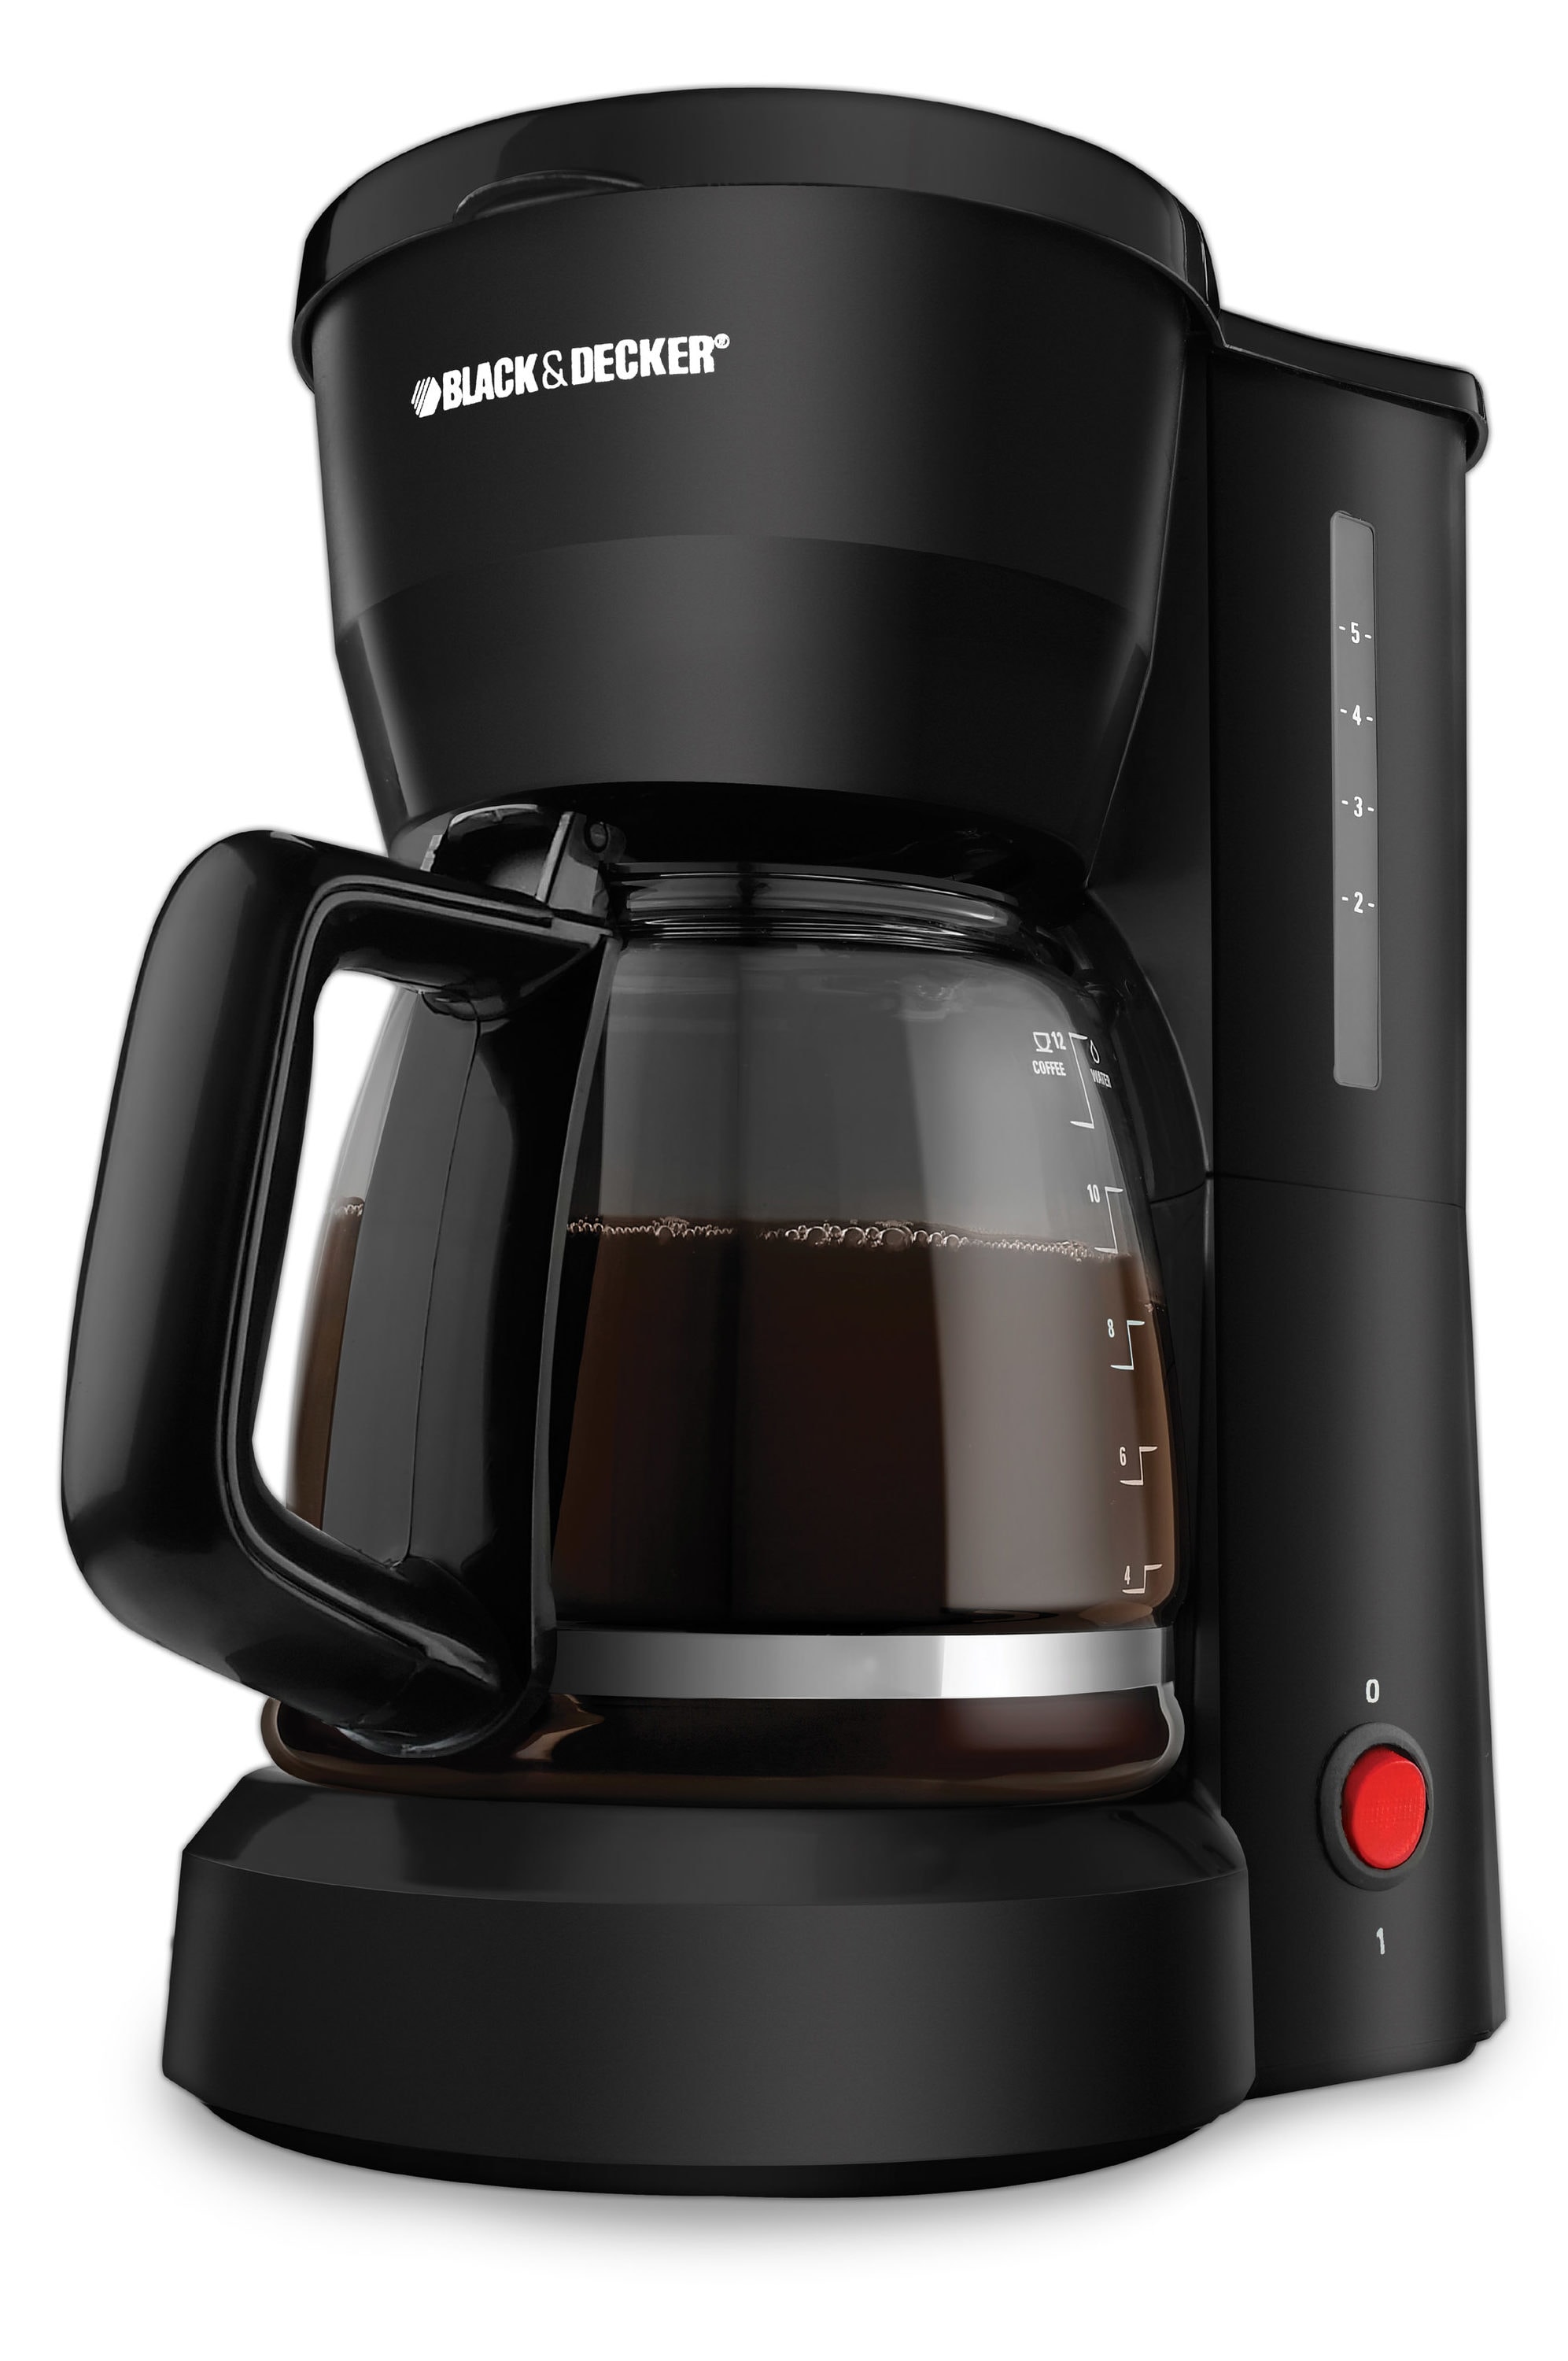 Black & Decker DCM600B 5-Cup Coffeemaker Black New Free Shipping 